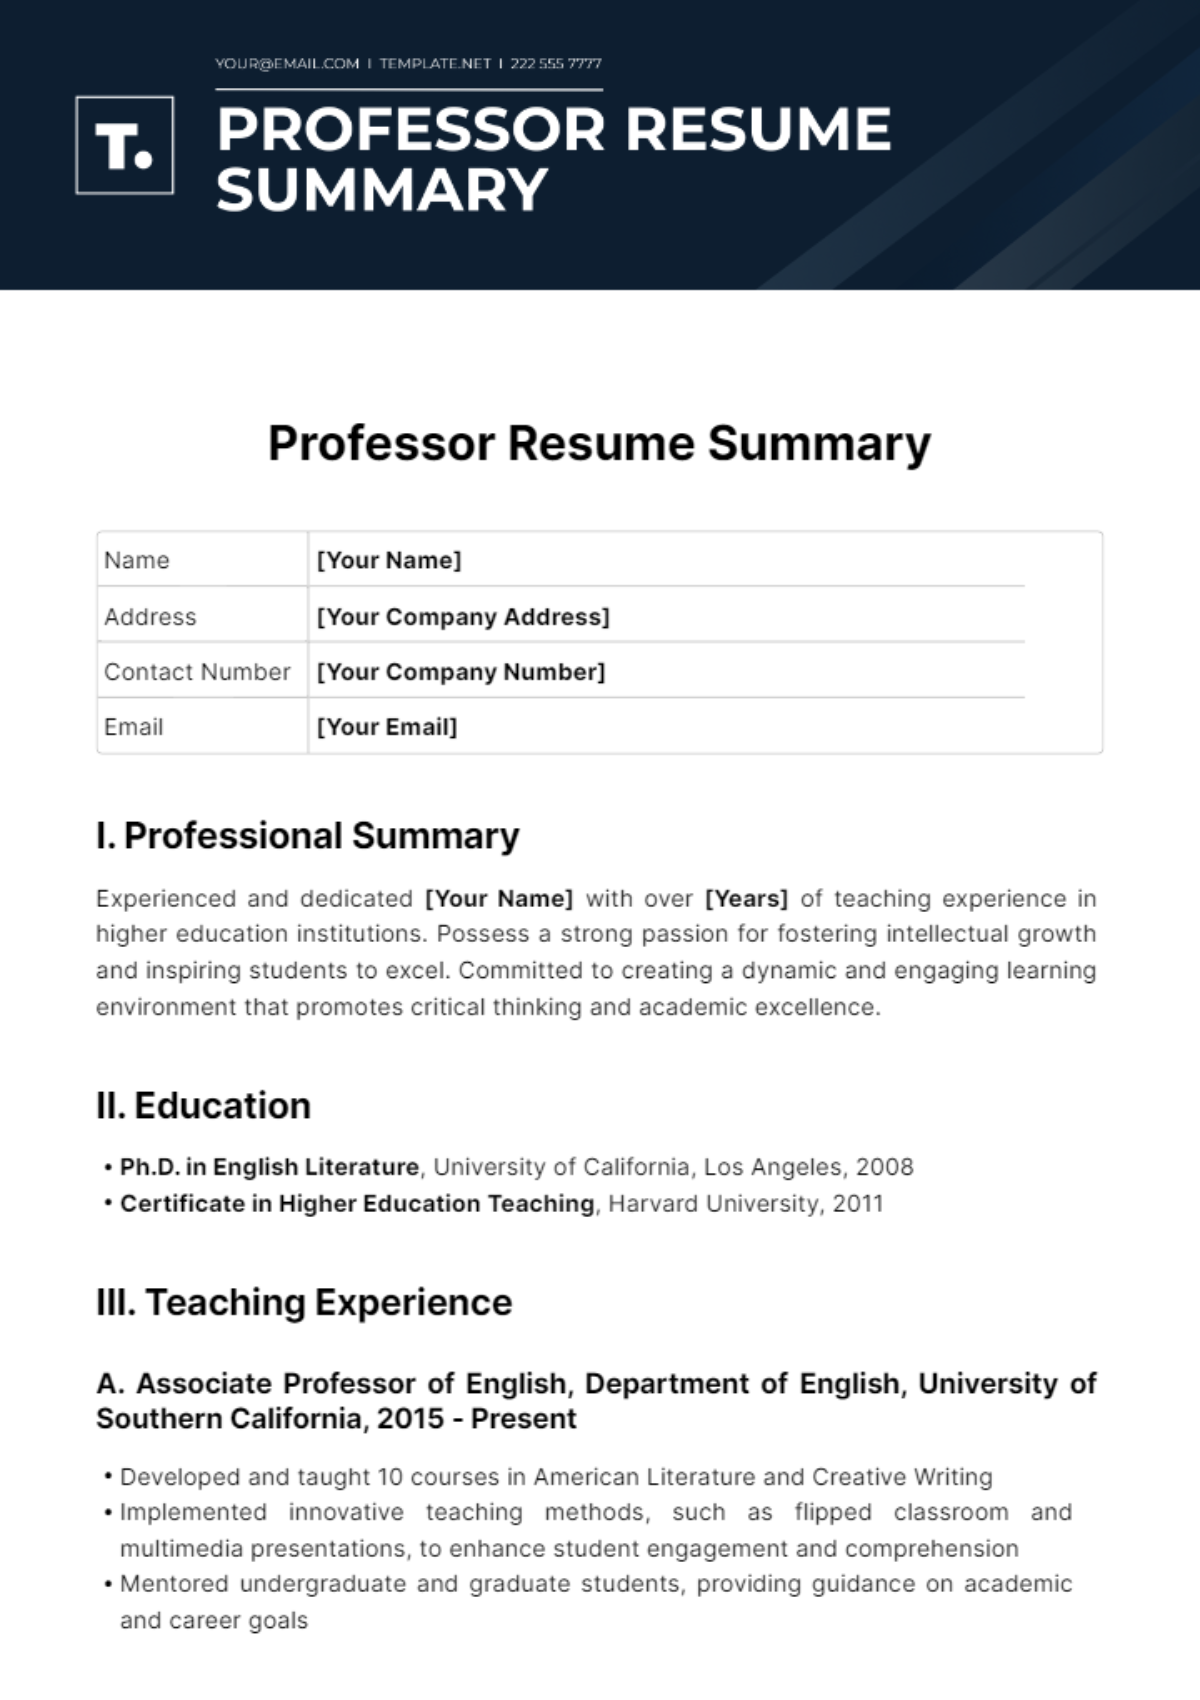 Free Professor Resume Summary Template